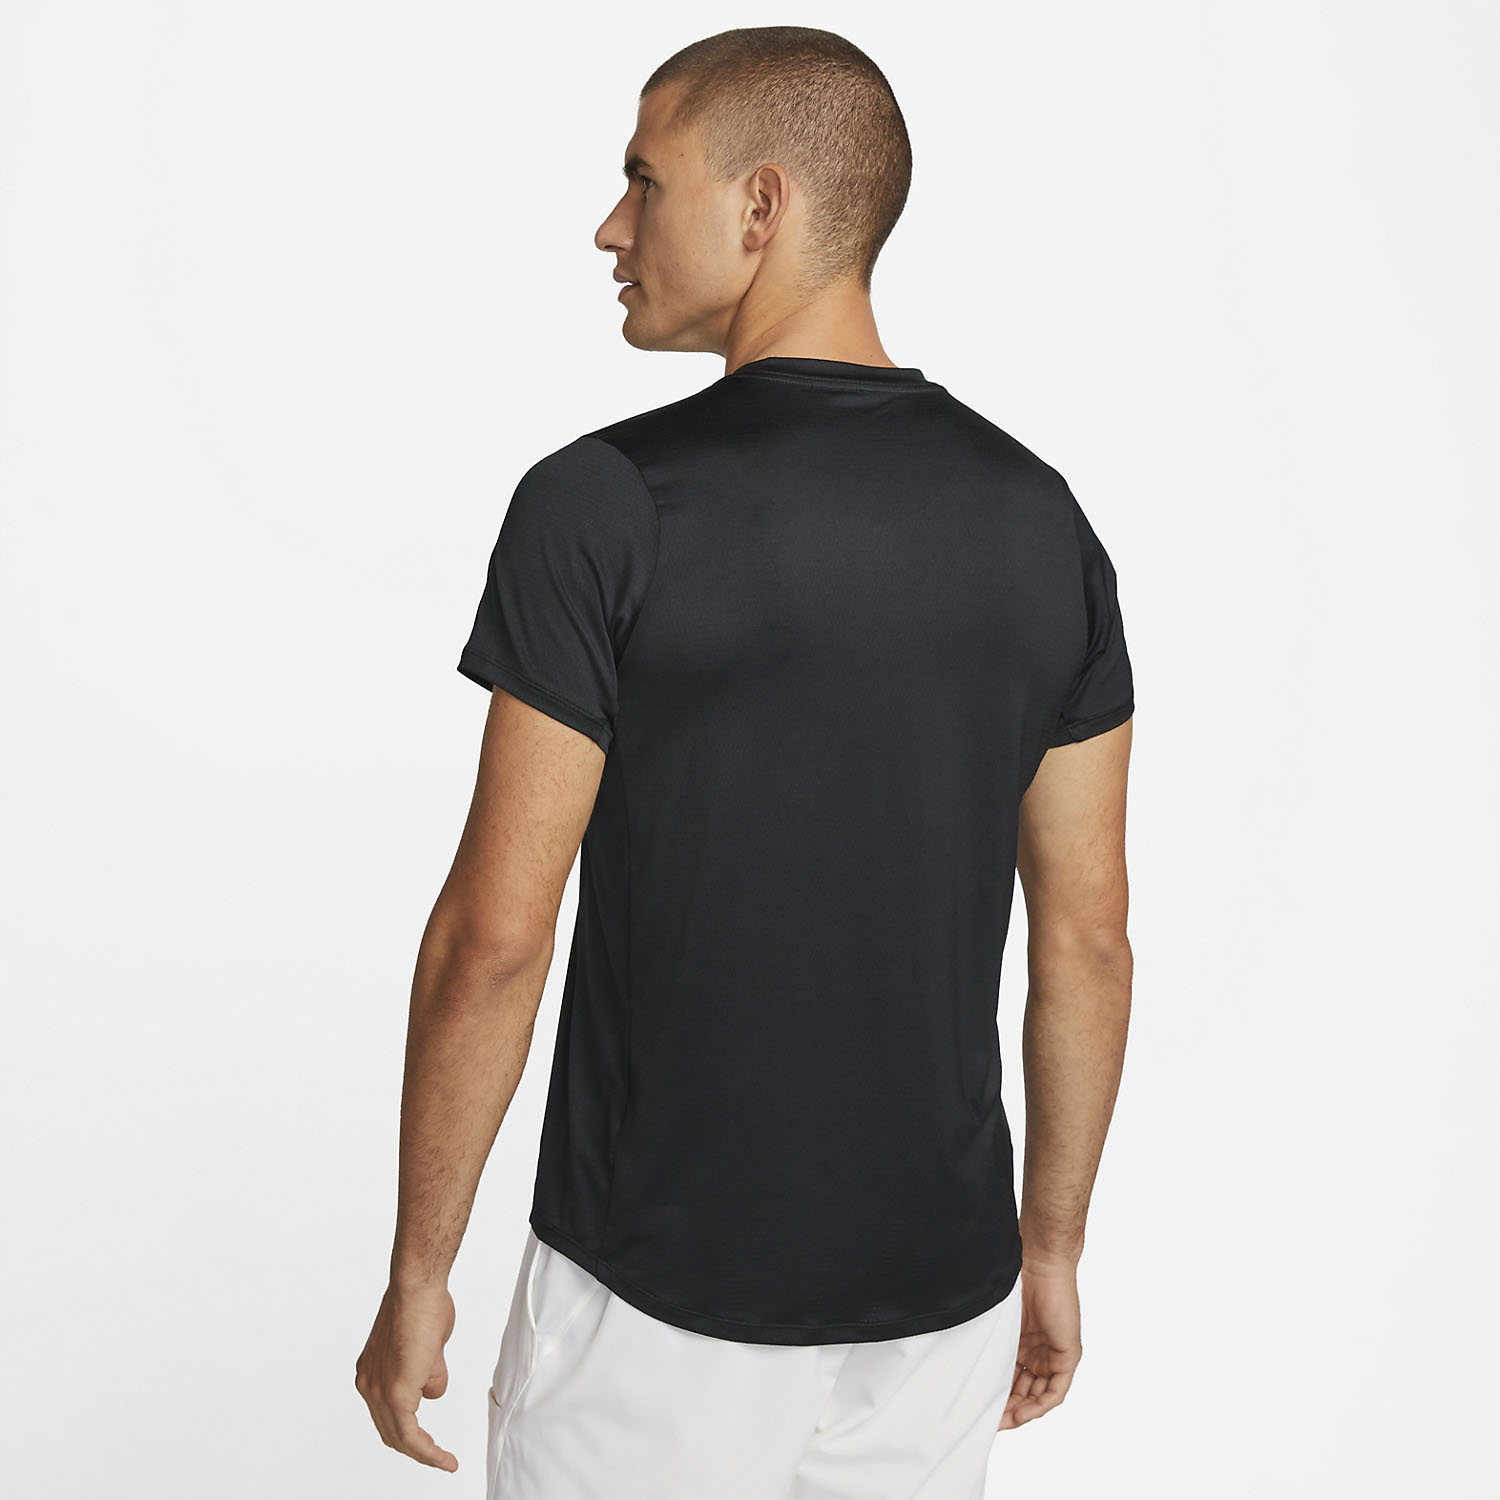 Nike Dri-FIT Advantage Men's Tennis T-Shirt - Black/White